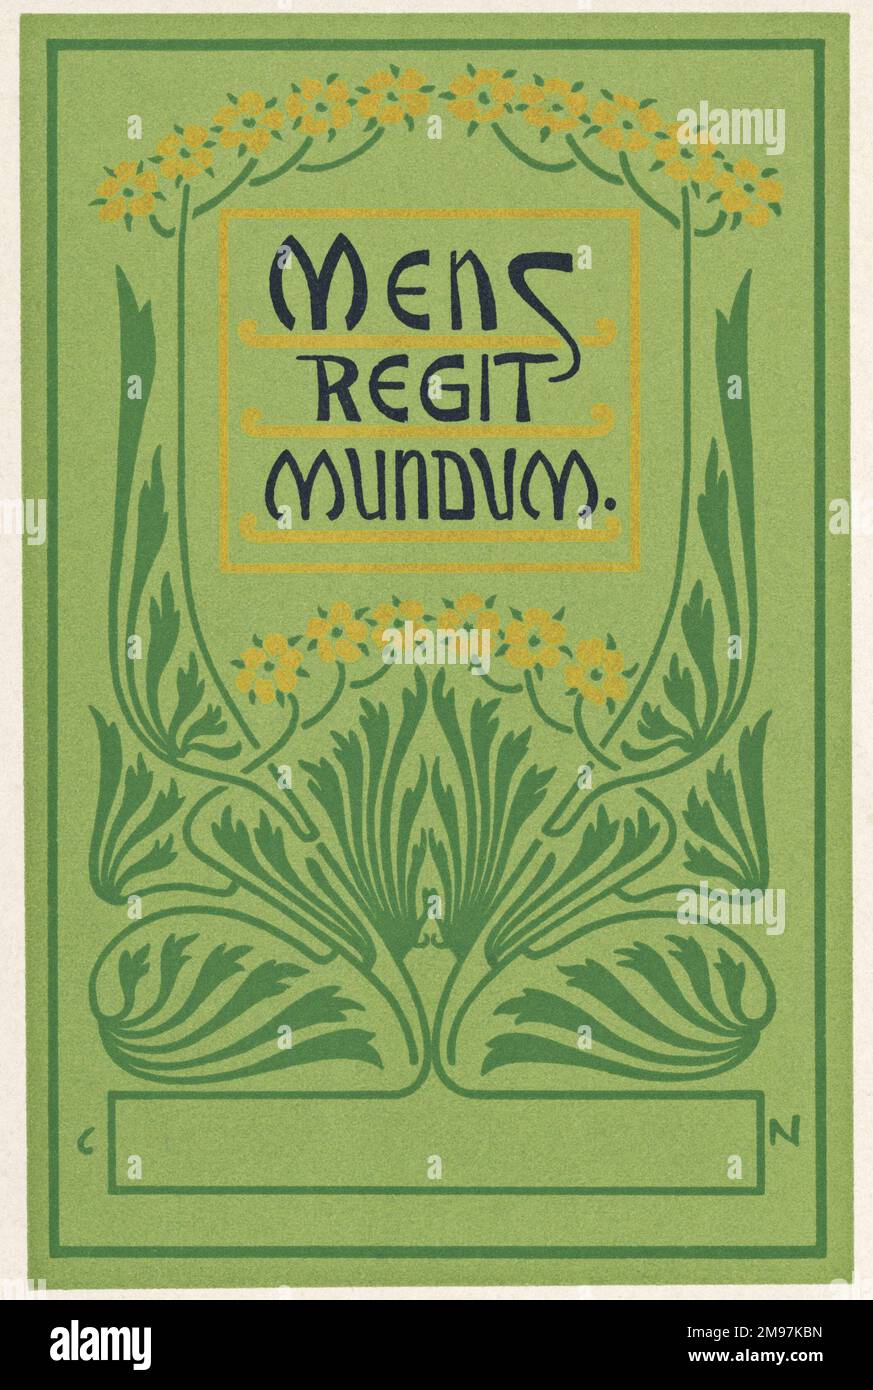 Art Nouveau design with the Latin saying: Mens Regit Mundum (The Mind Rules the World). Stock Photo